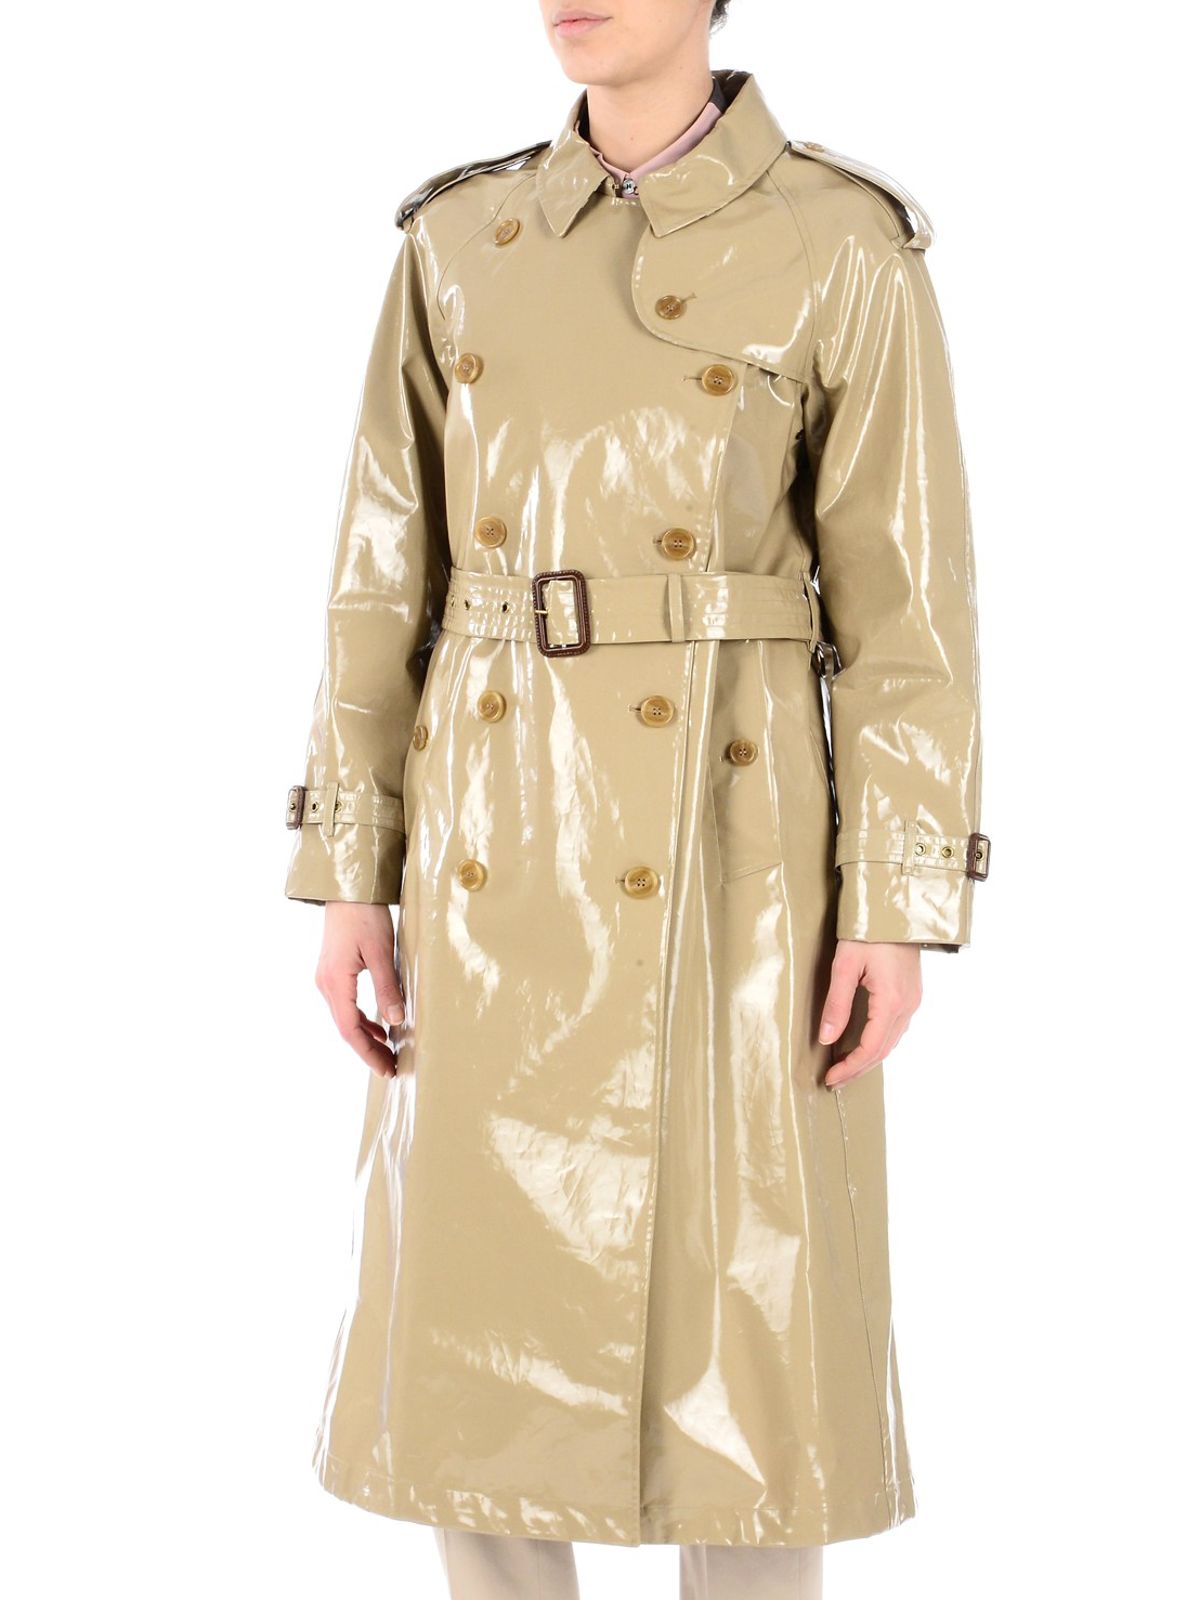 burberry raincoat sale